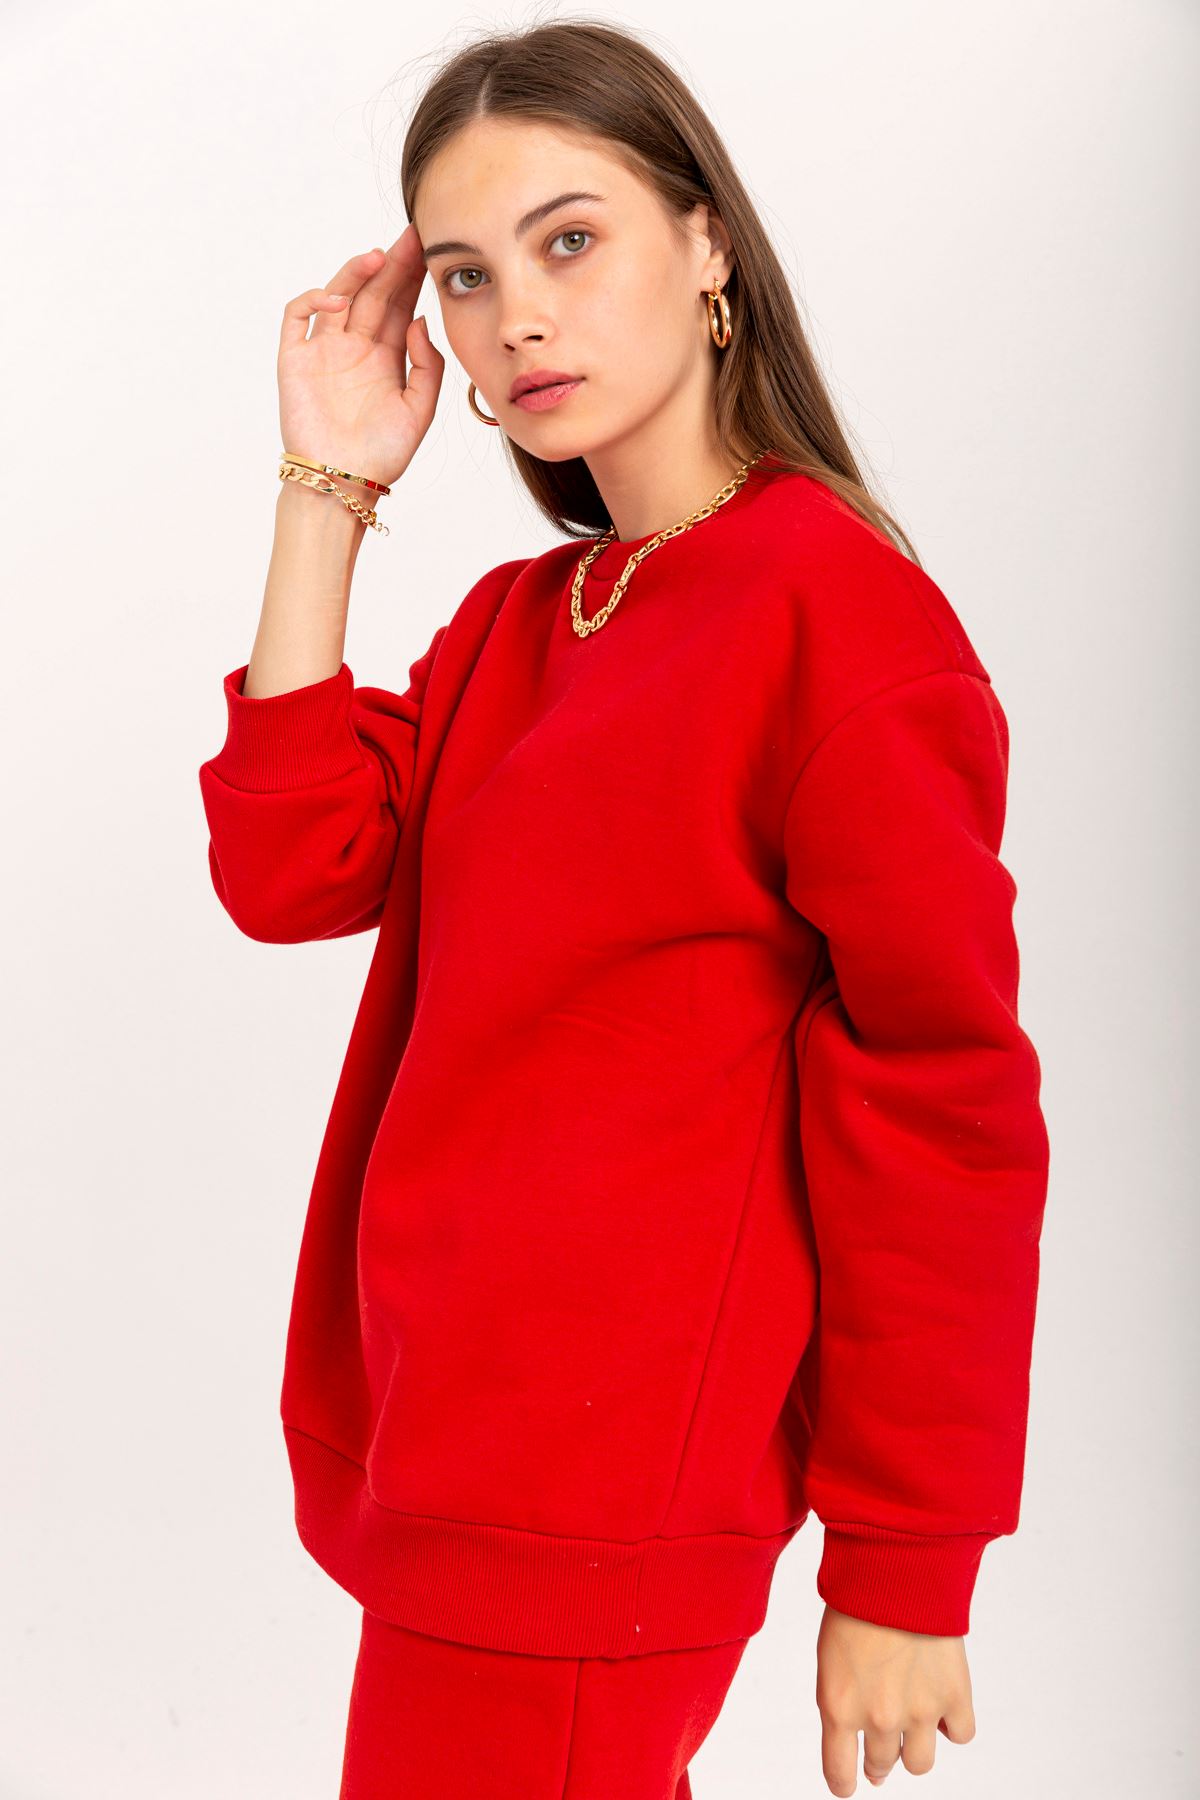 Third Knit With Wool İnside Fabric Long Sleeve Below Hip Women Sweatshirt - Red